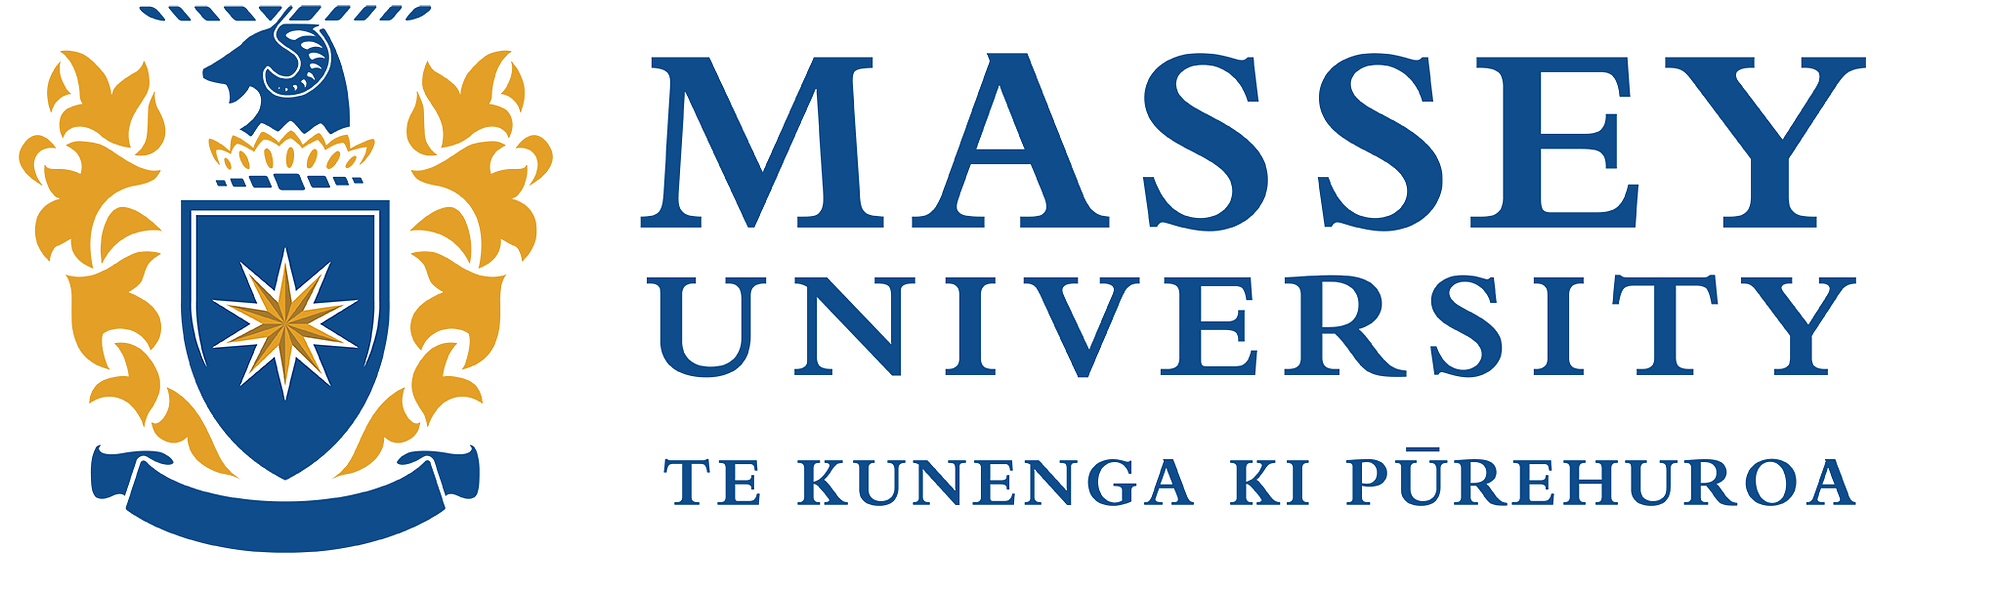 Massey University New Zealand